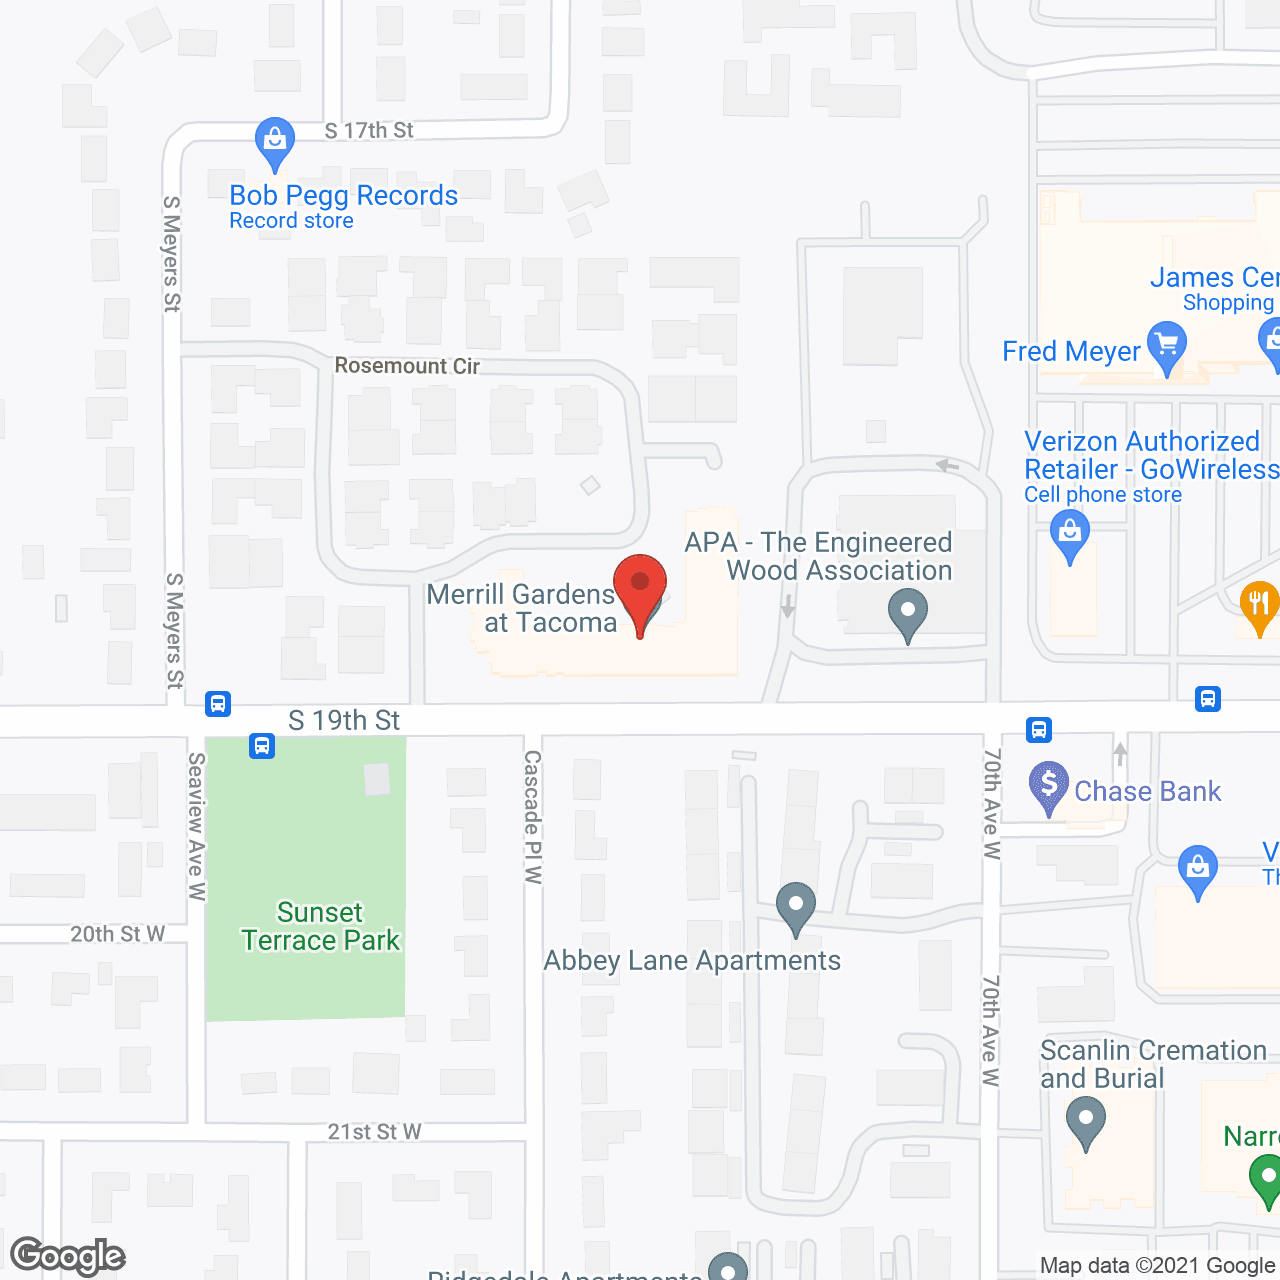 Merrill Gardens at Tacoma in google map